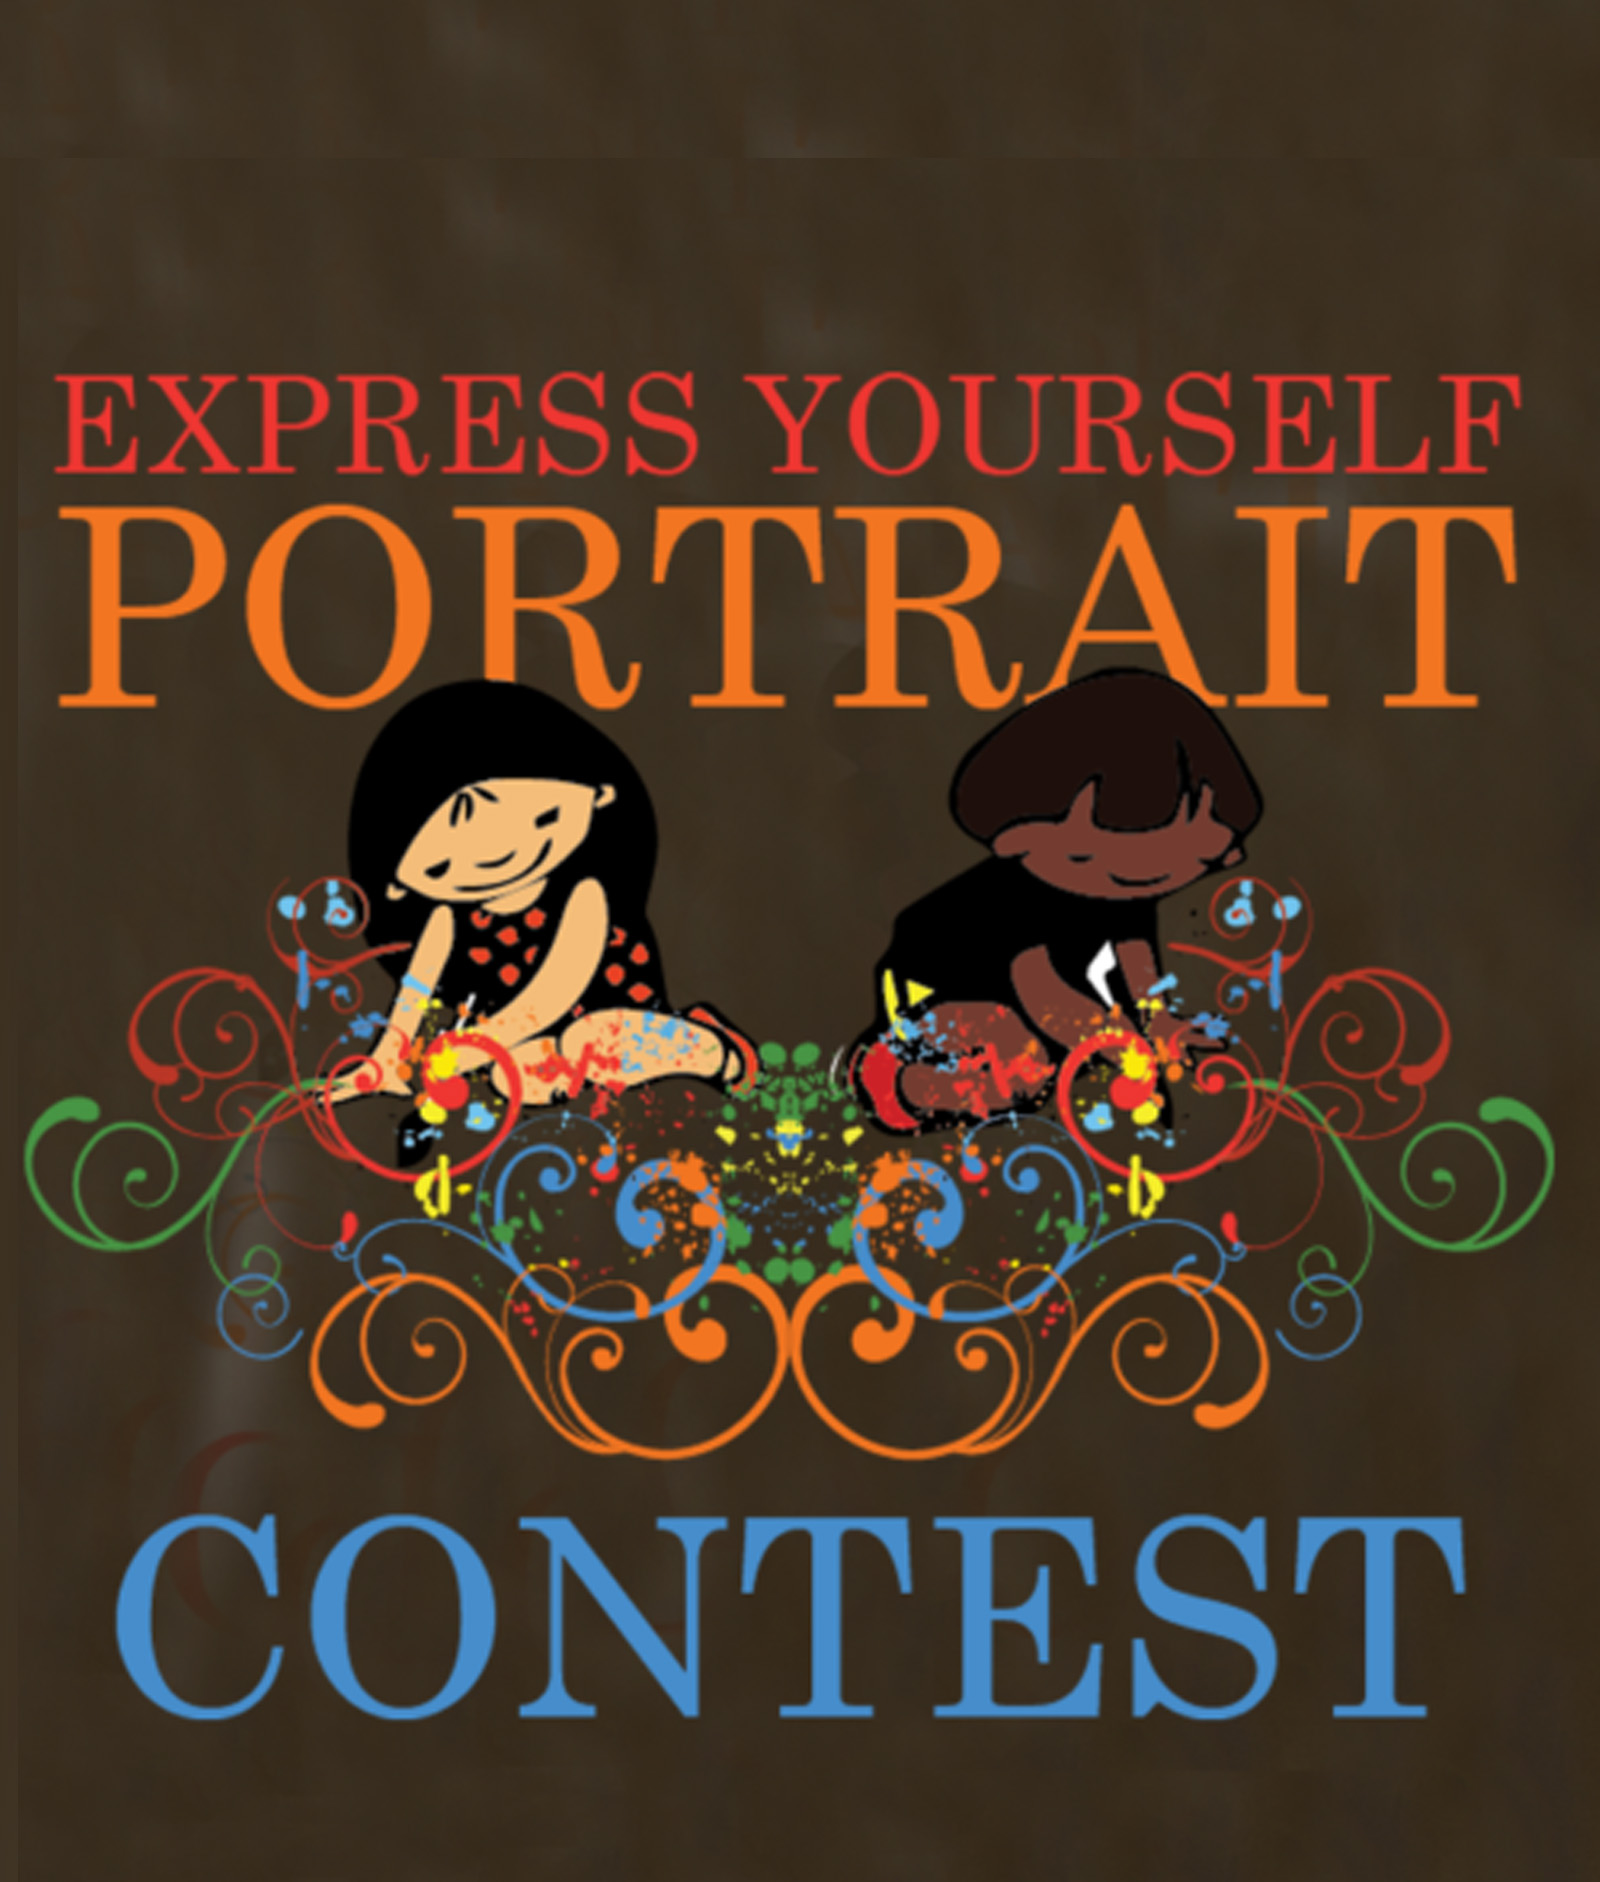 Express Yourself Portrait Contest